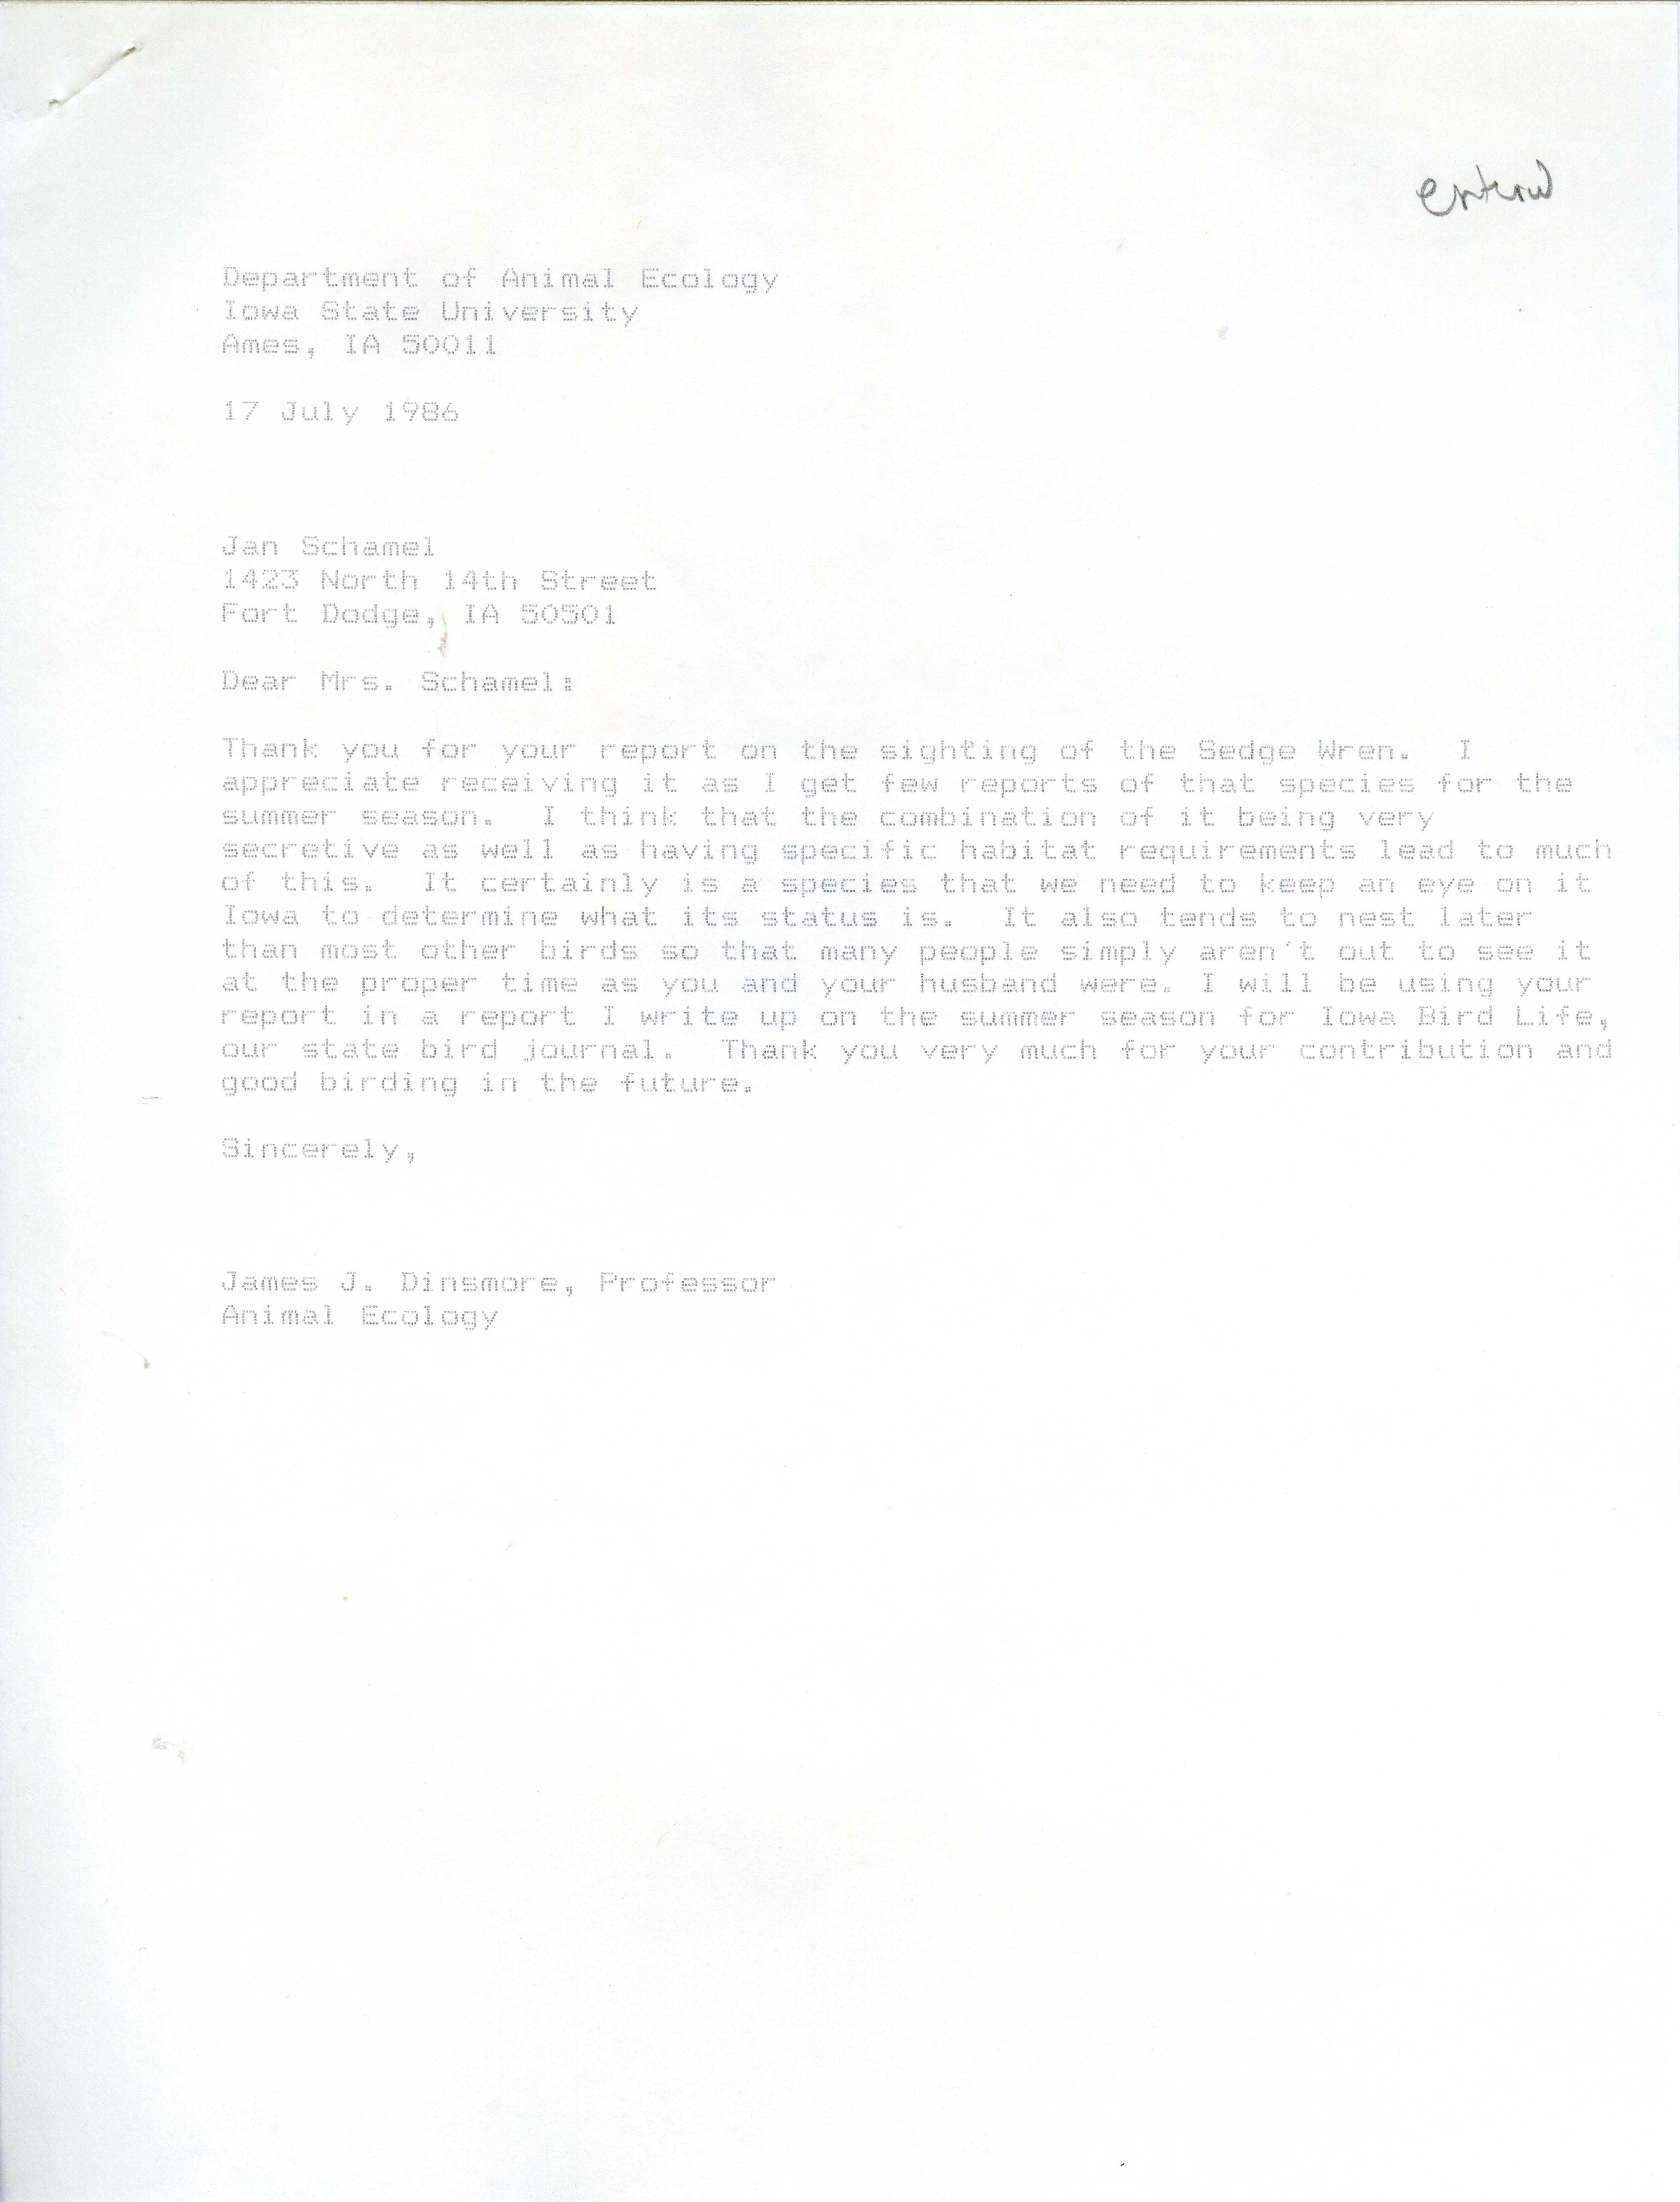 James J. Dinsmore letter to Jan Schamel regarding a Sedge Wren sighting, July 17, 1986